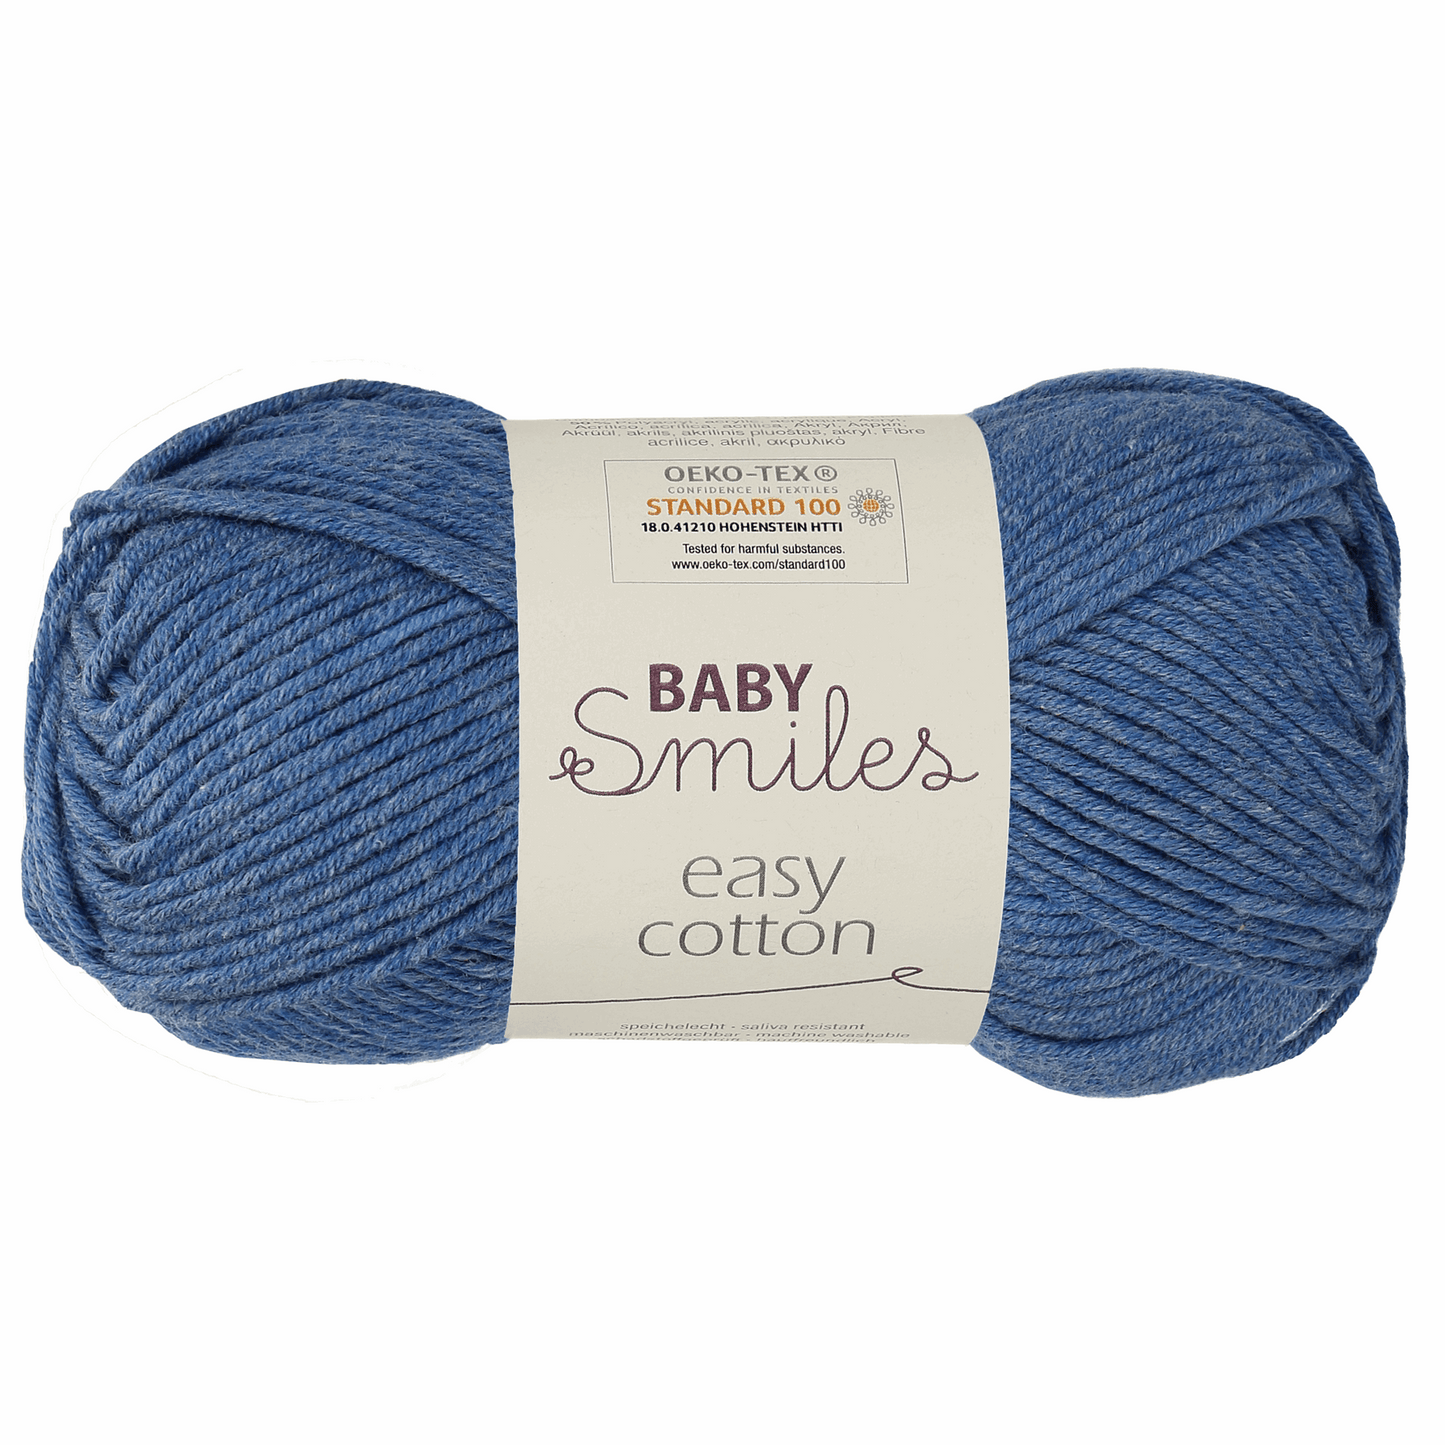 Easy Cotton -Baby smiles, 90306, Farbe 1052, jeans